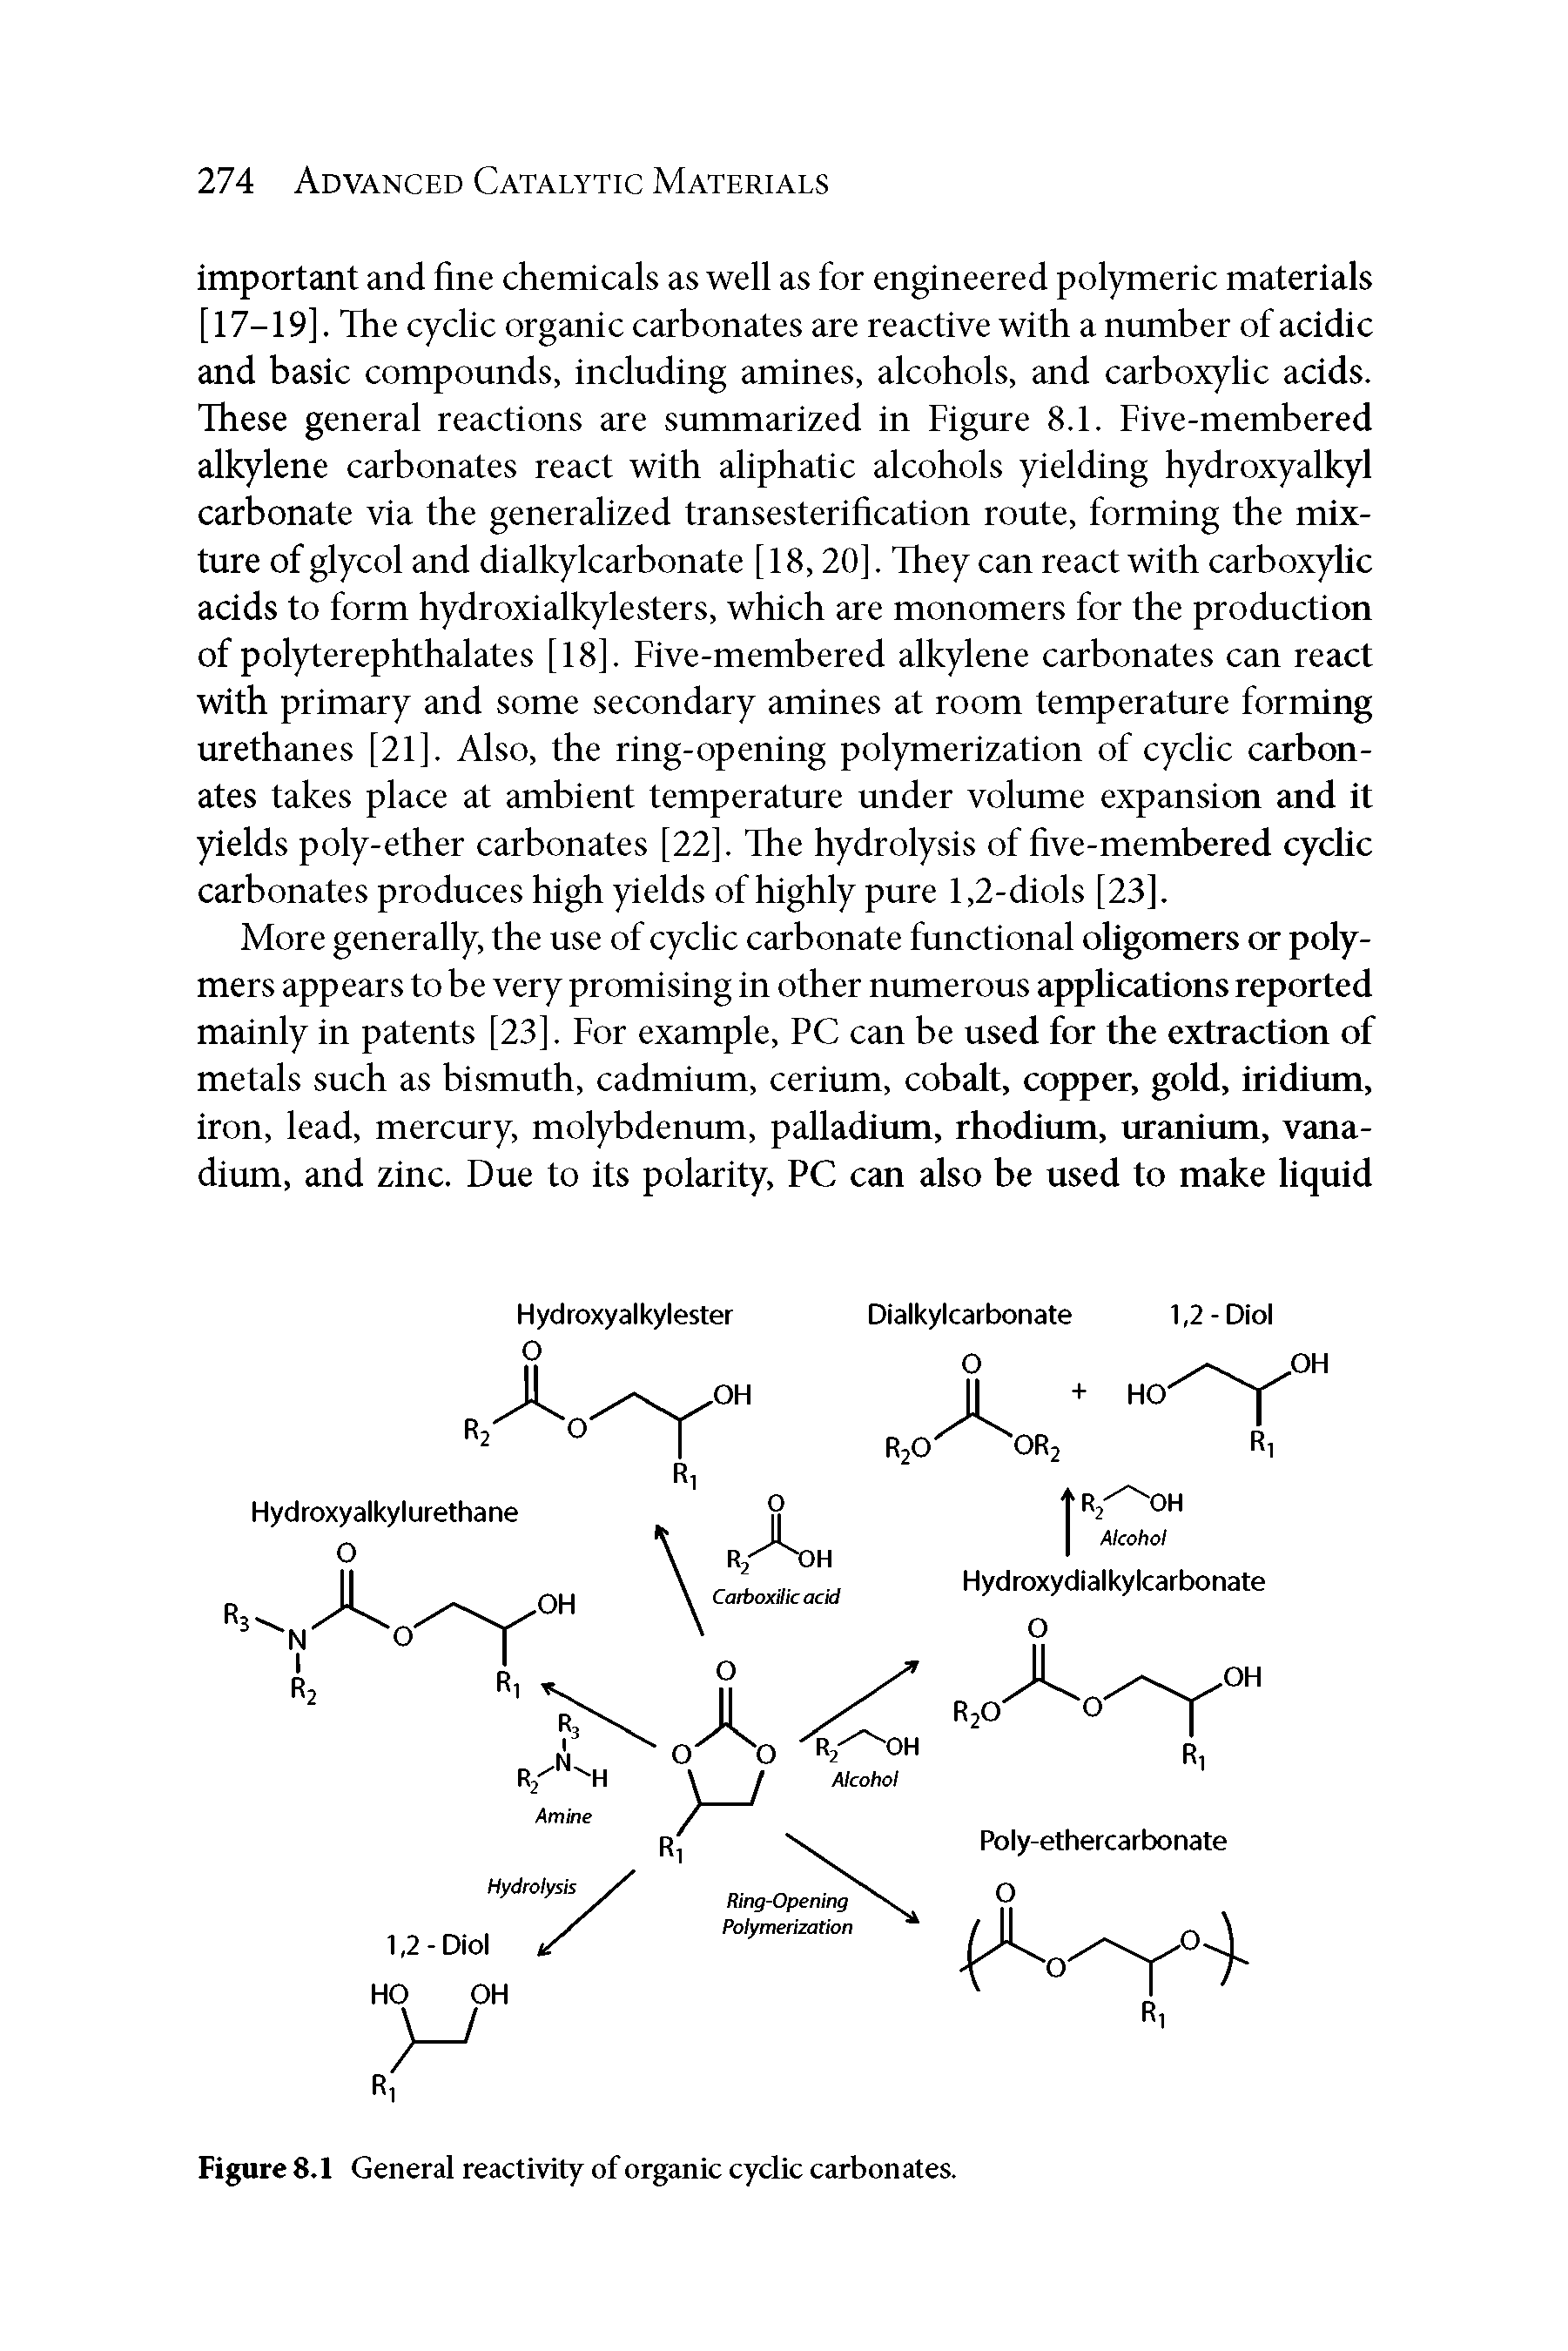 Figure 8.1 General reactivity of organic cyclic carbonates.